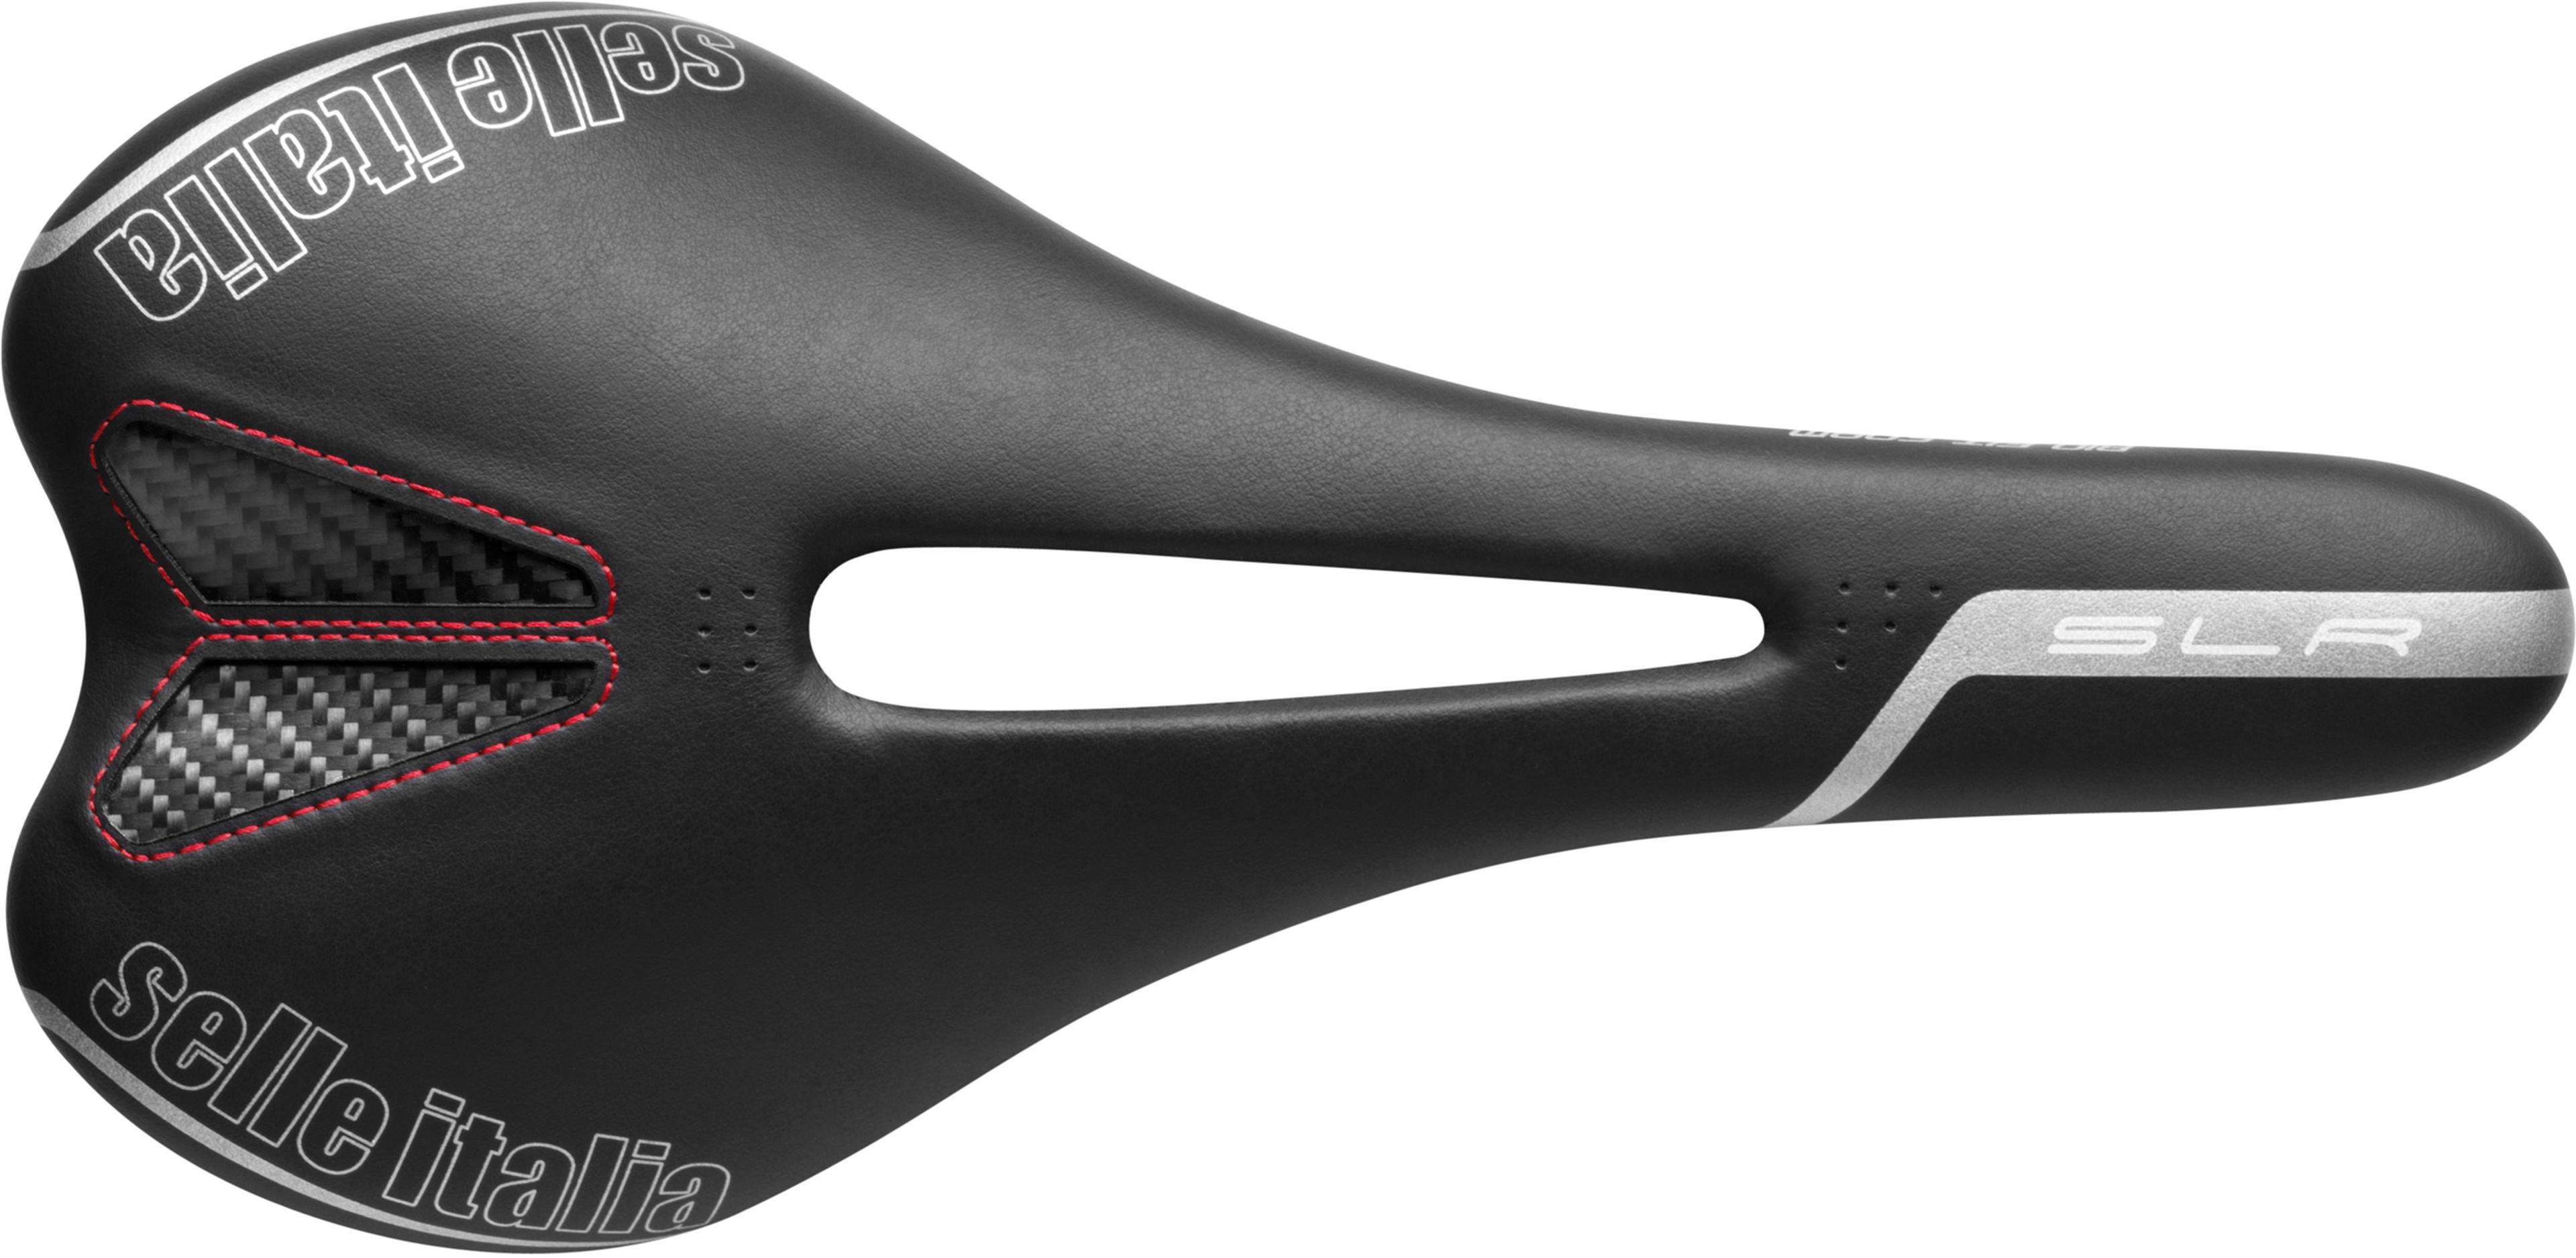 Selle Italia SLR Kit Carbonio Flow Saddle with Carbon Rails